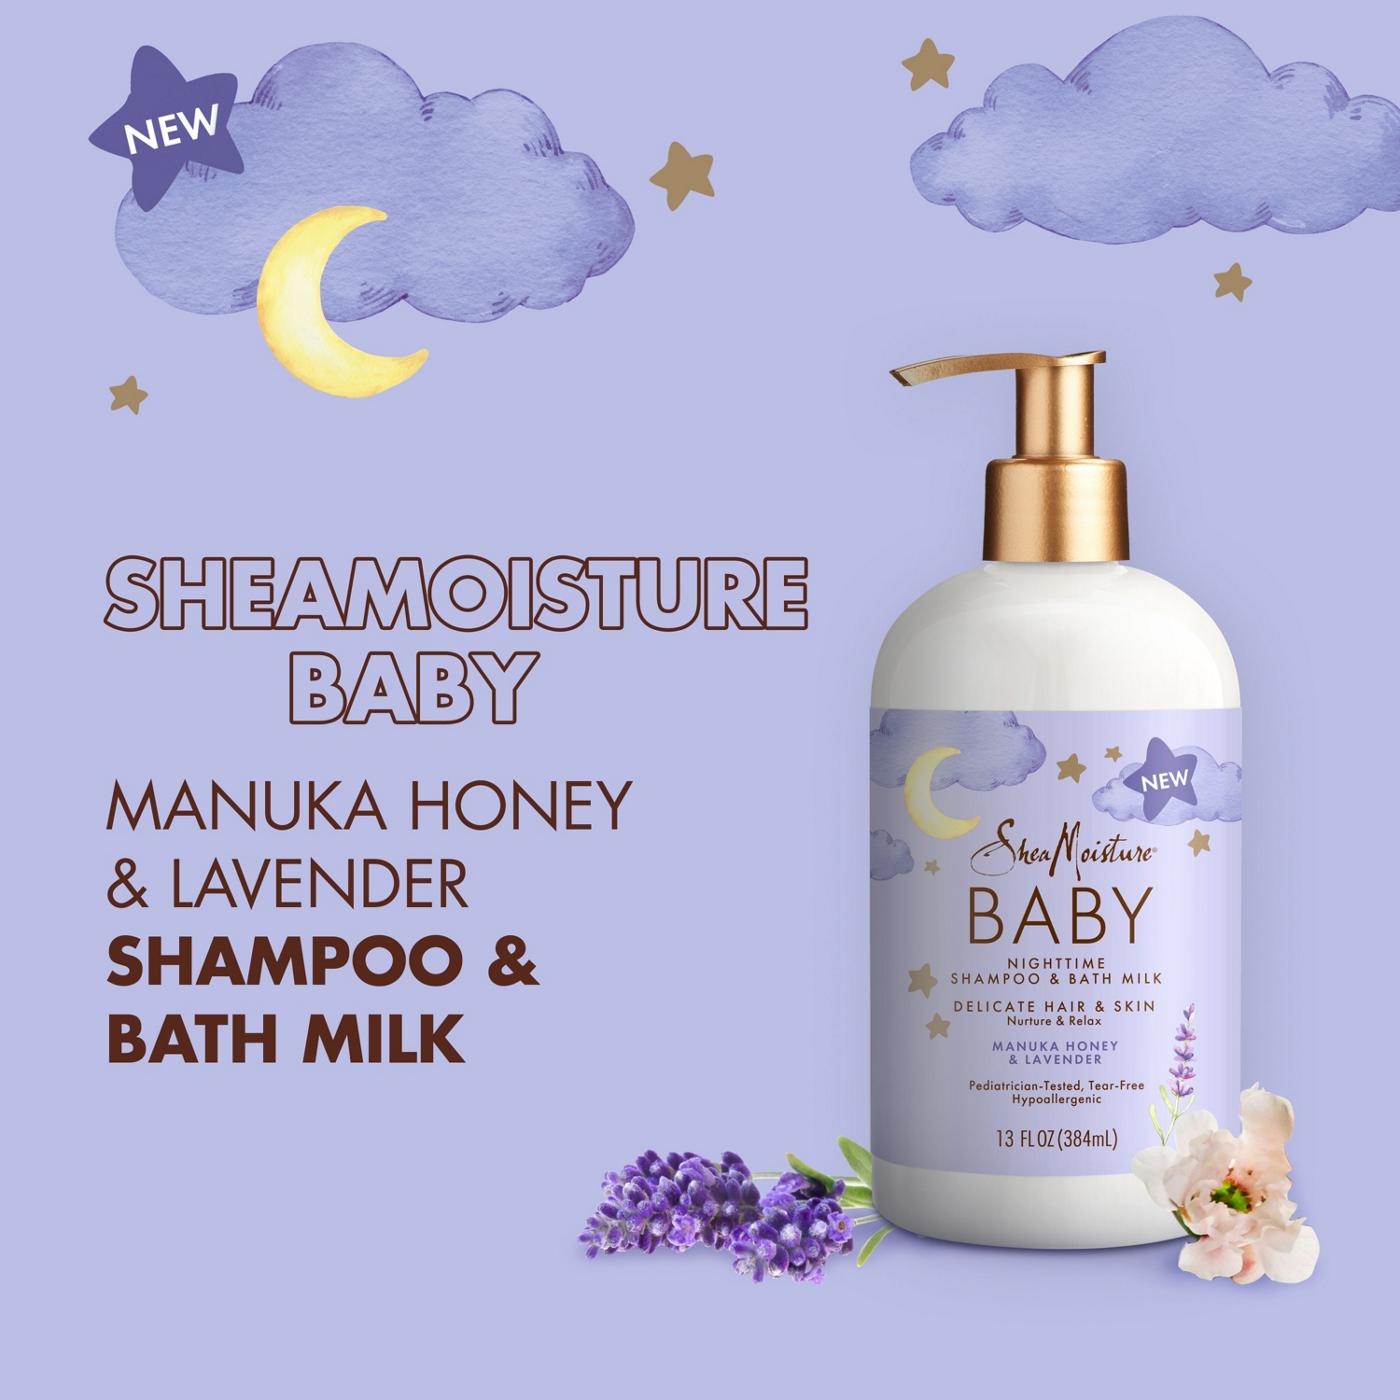 SheaMoisture Baby Nighttime Shampoo & Bath Milk - Manuka Honey & Lavender; image 6 of 6